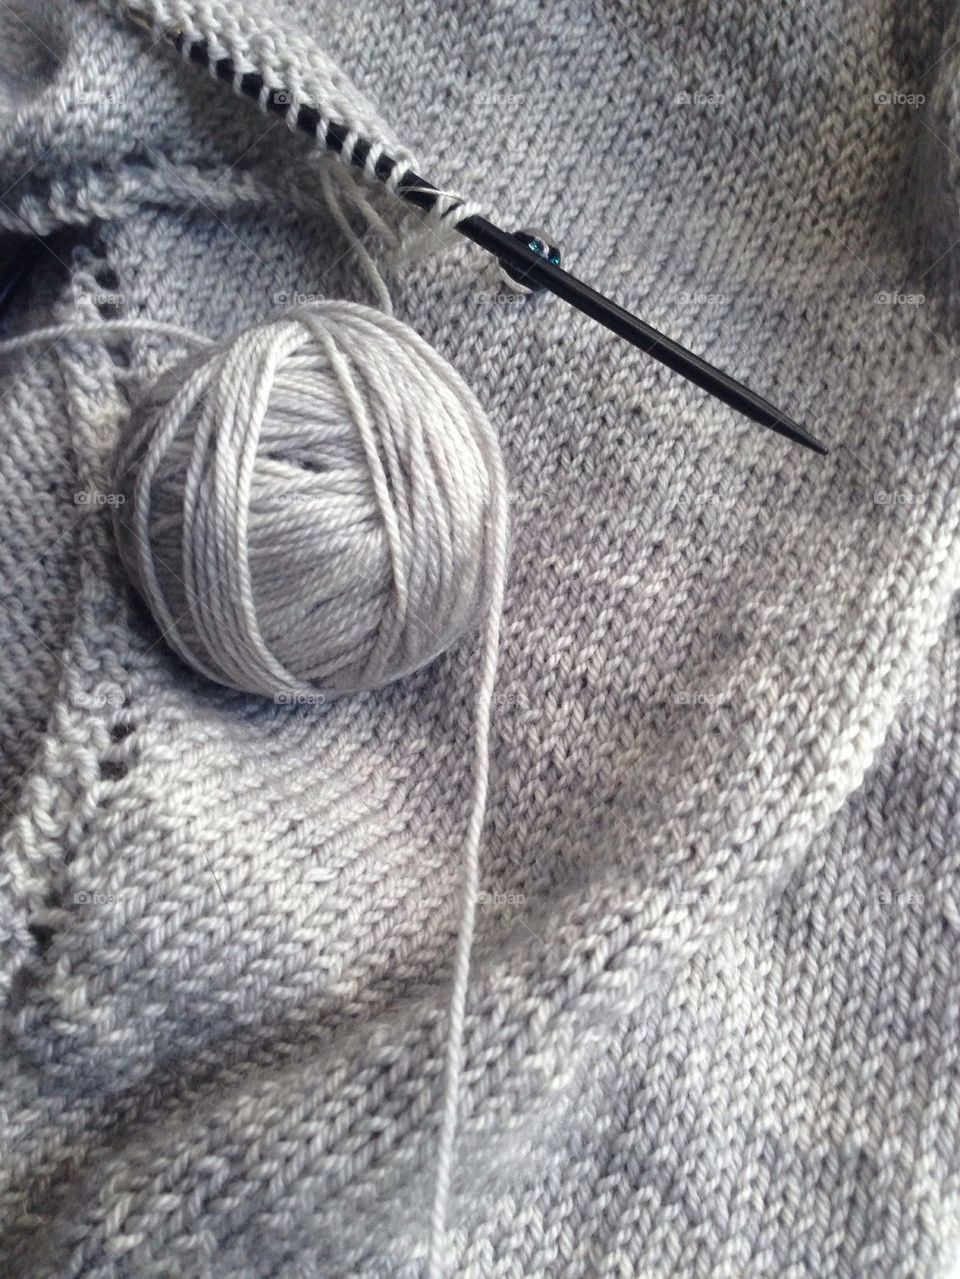 Knitting, in greyscale.